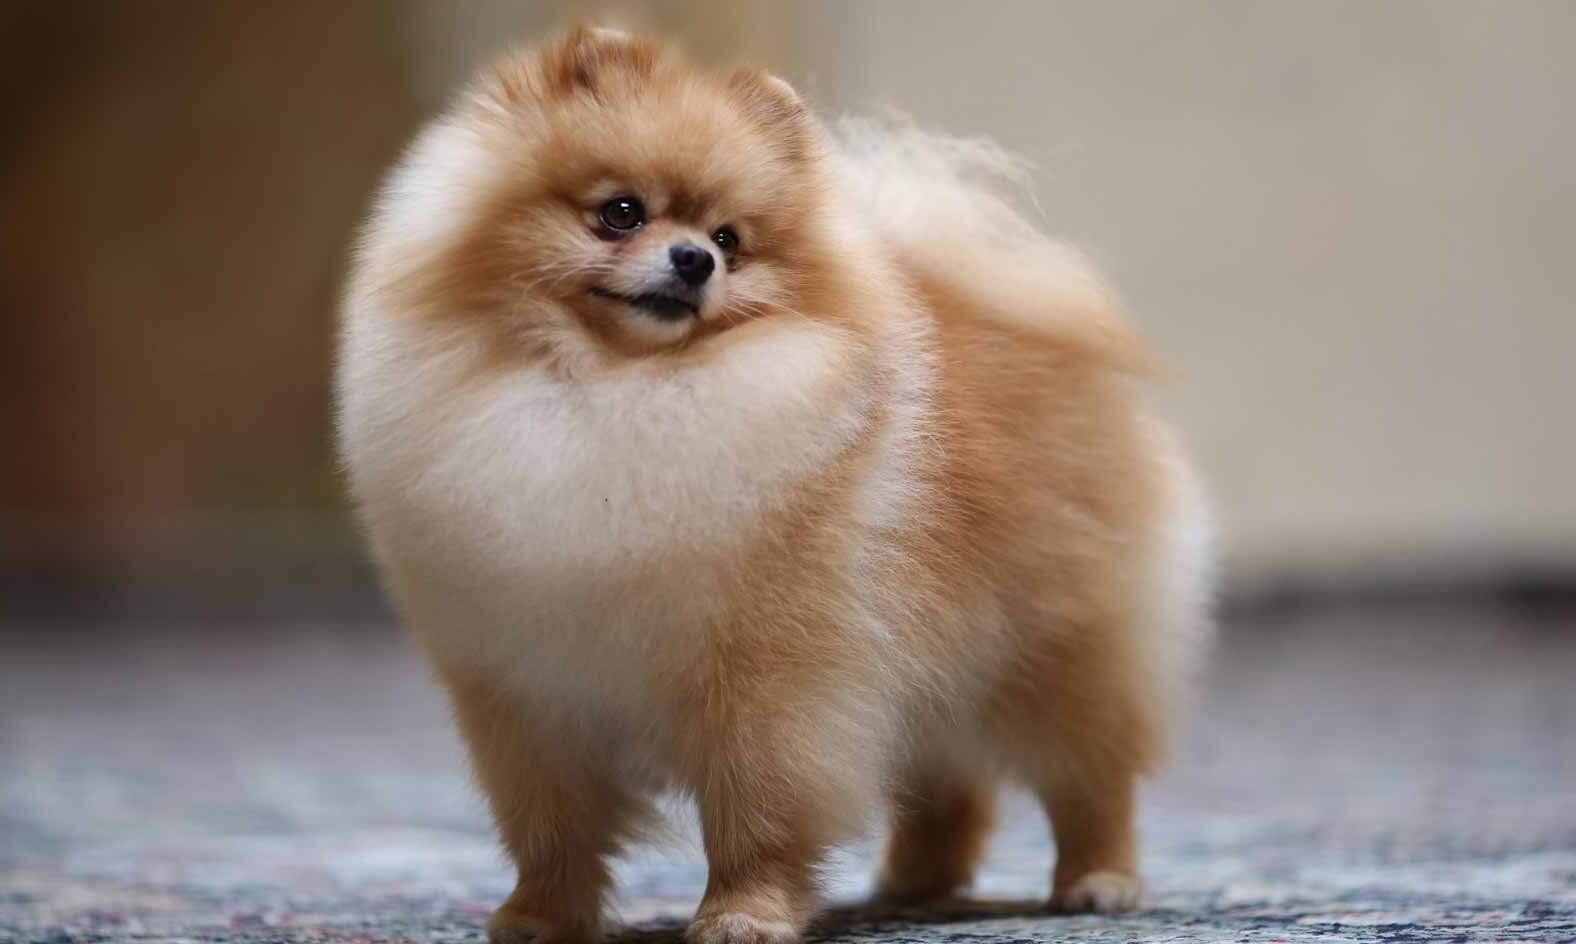 Pomeranian: tiniest dog breed in the world